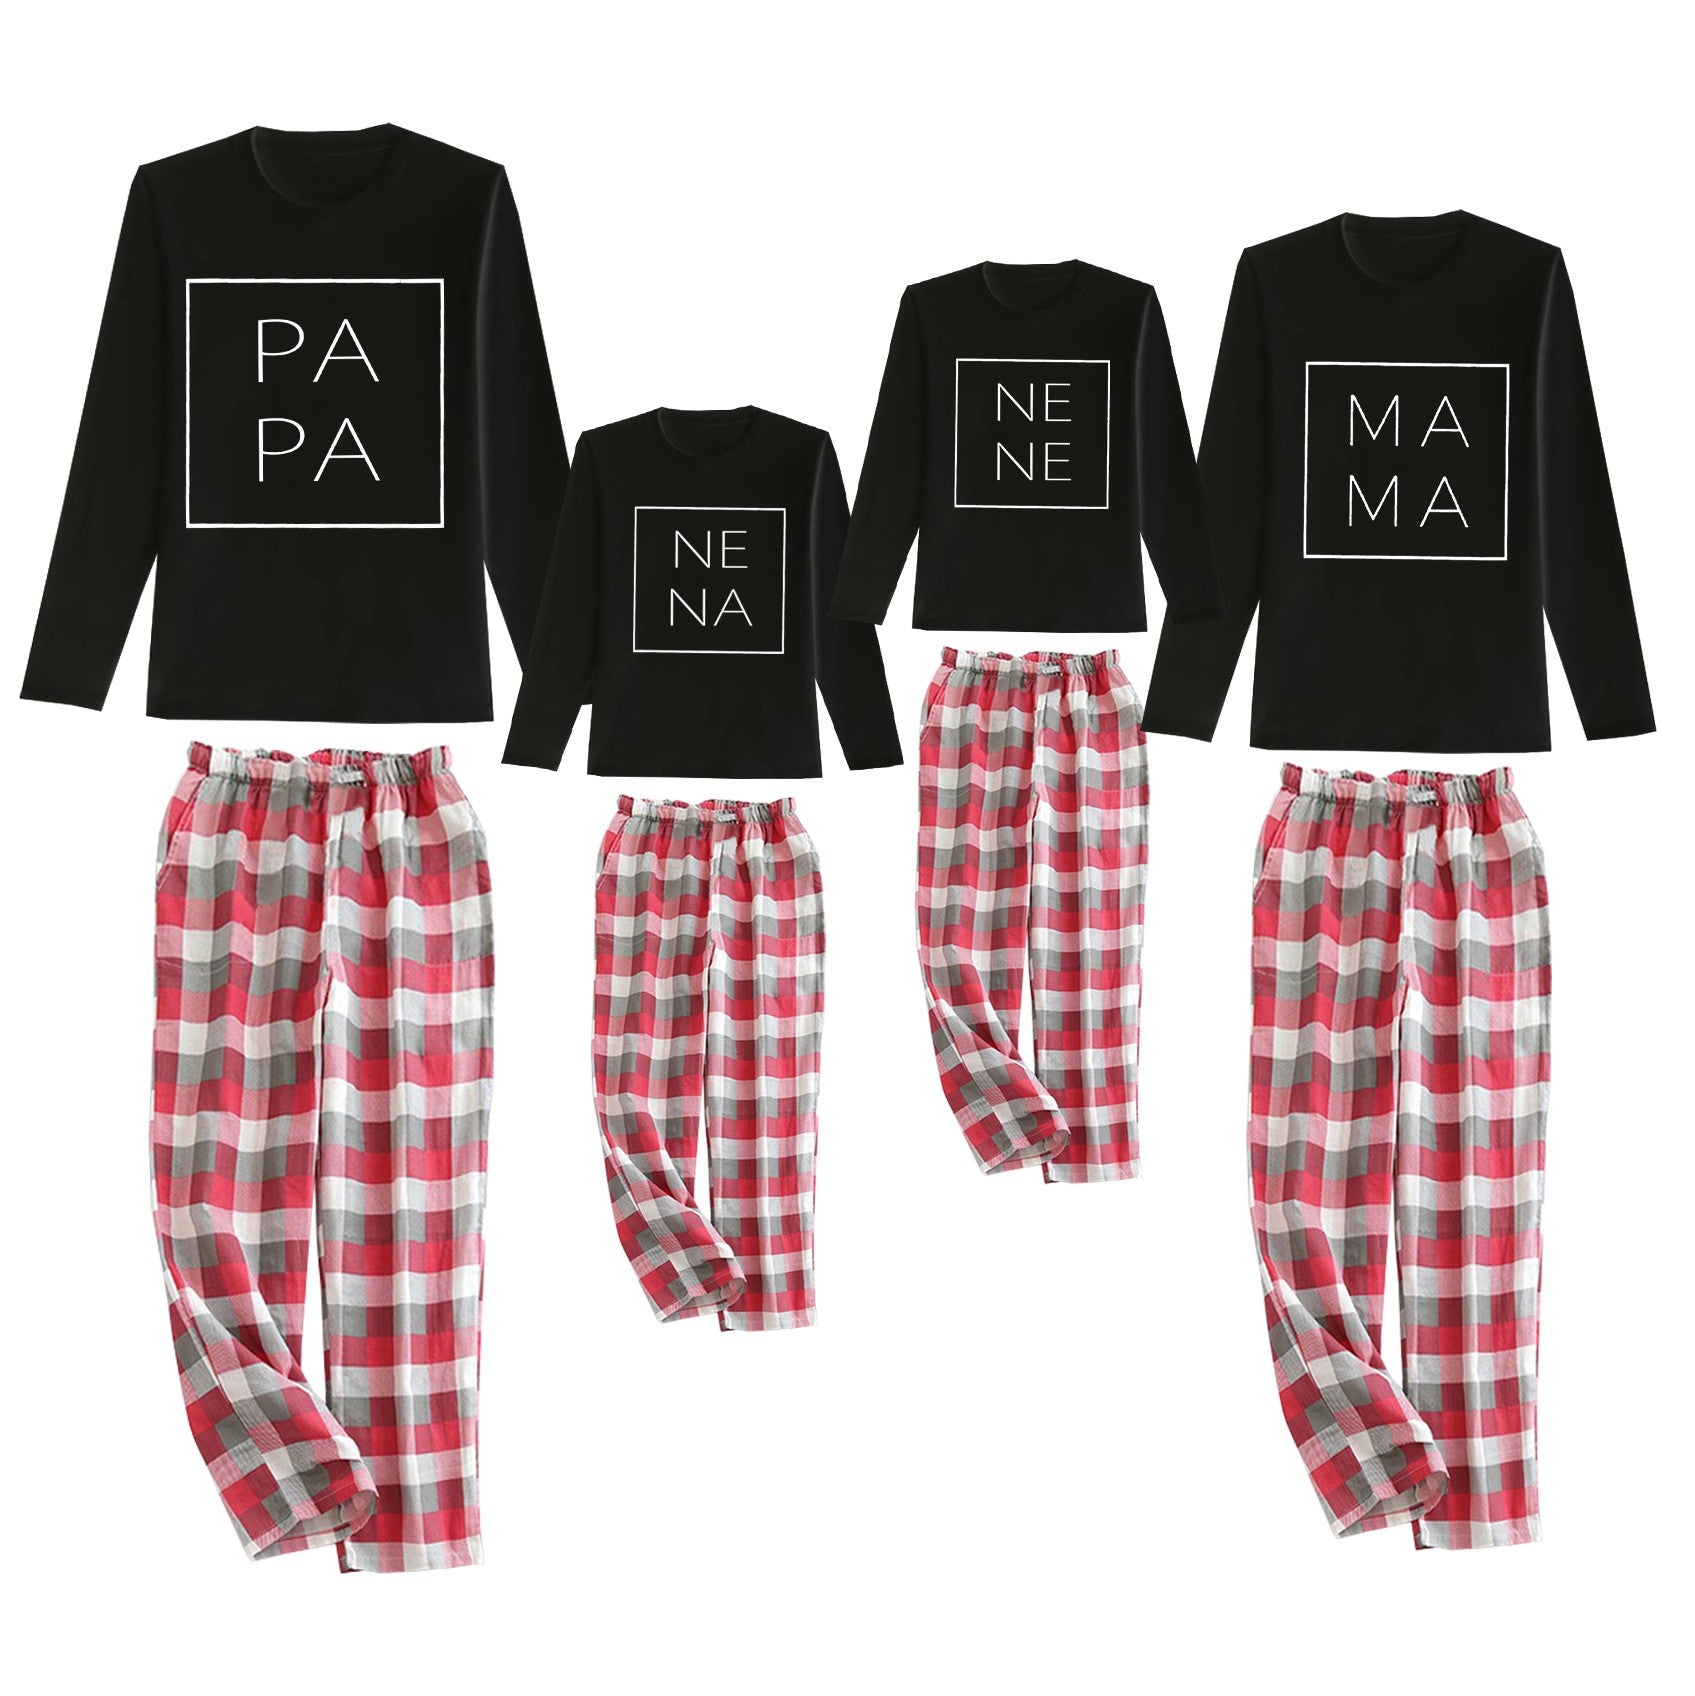 Pijama Family Experience Black T -Shirt und rote Hosen weiße Texte